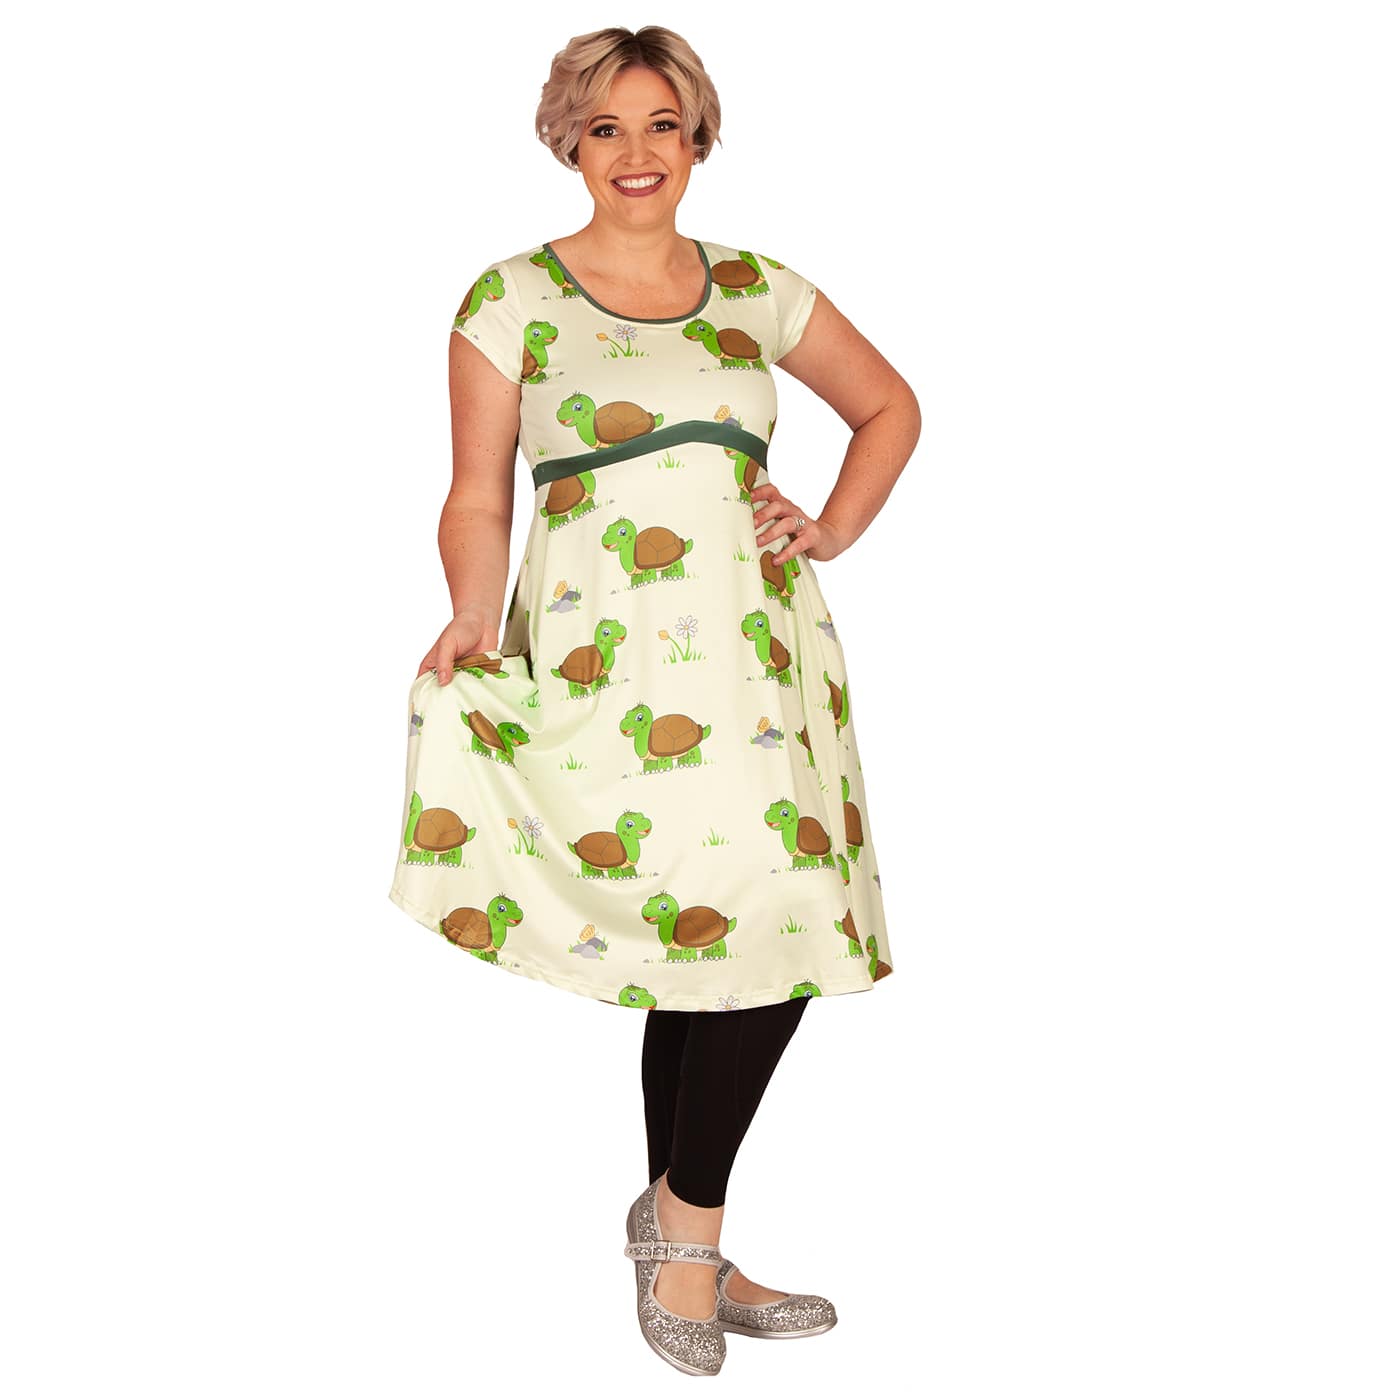 Wisdom Tea Dress by RainbowsAndFairies.com.au (Tortoise - Turtle - Animal Print - Dress With Pockets - Mod Retro - Vintage Inspired - Kitsch) - SKU: CL_TEADR_WISDO_ORG - Pic-03